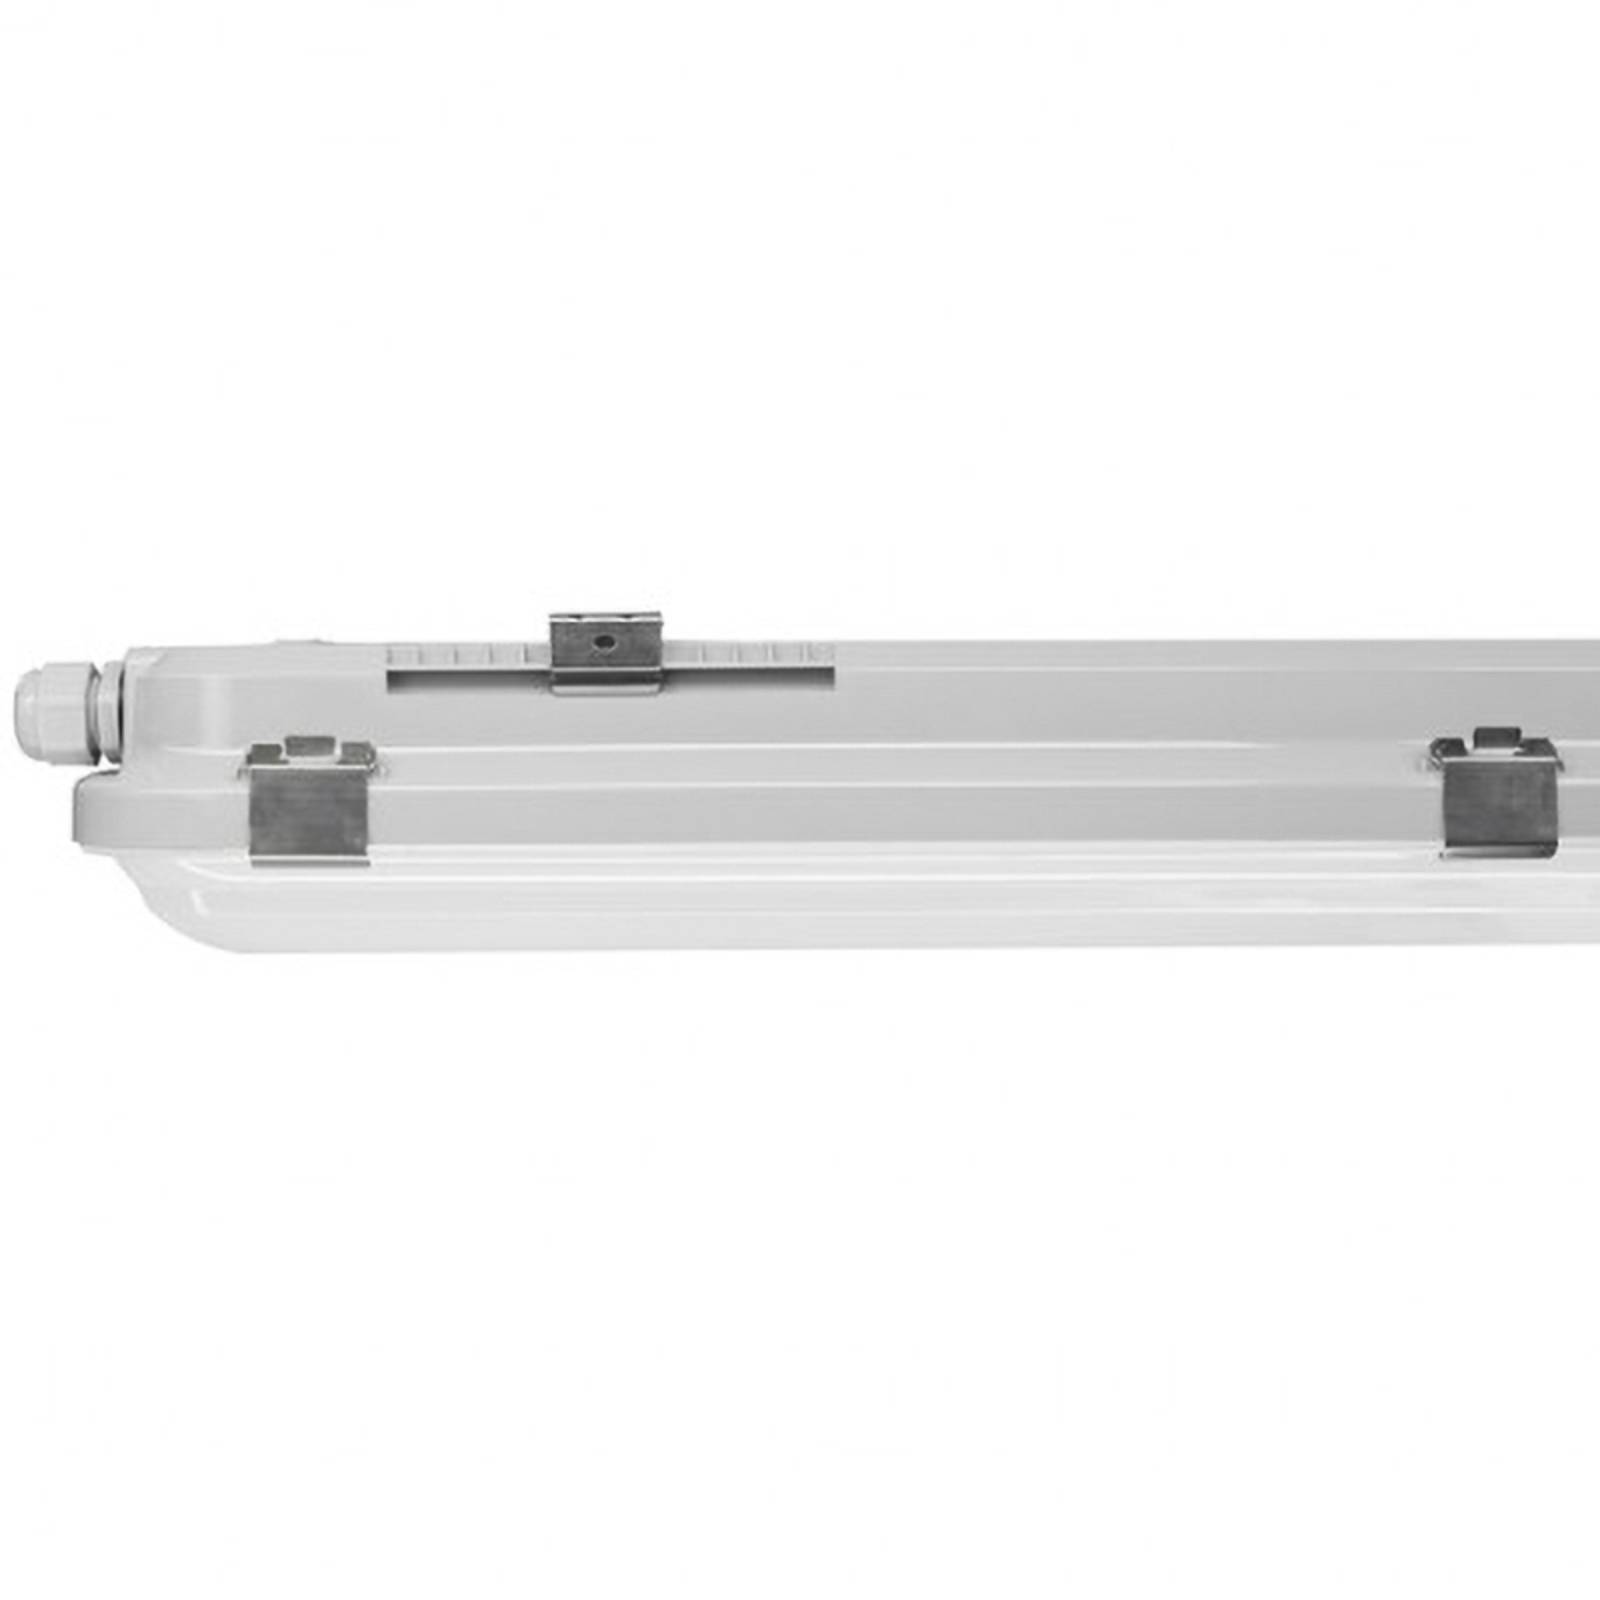 InnoGreen AQUOS 3.0 BASELine LED-lampa 122 cm 840